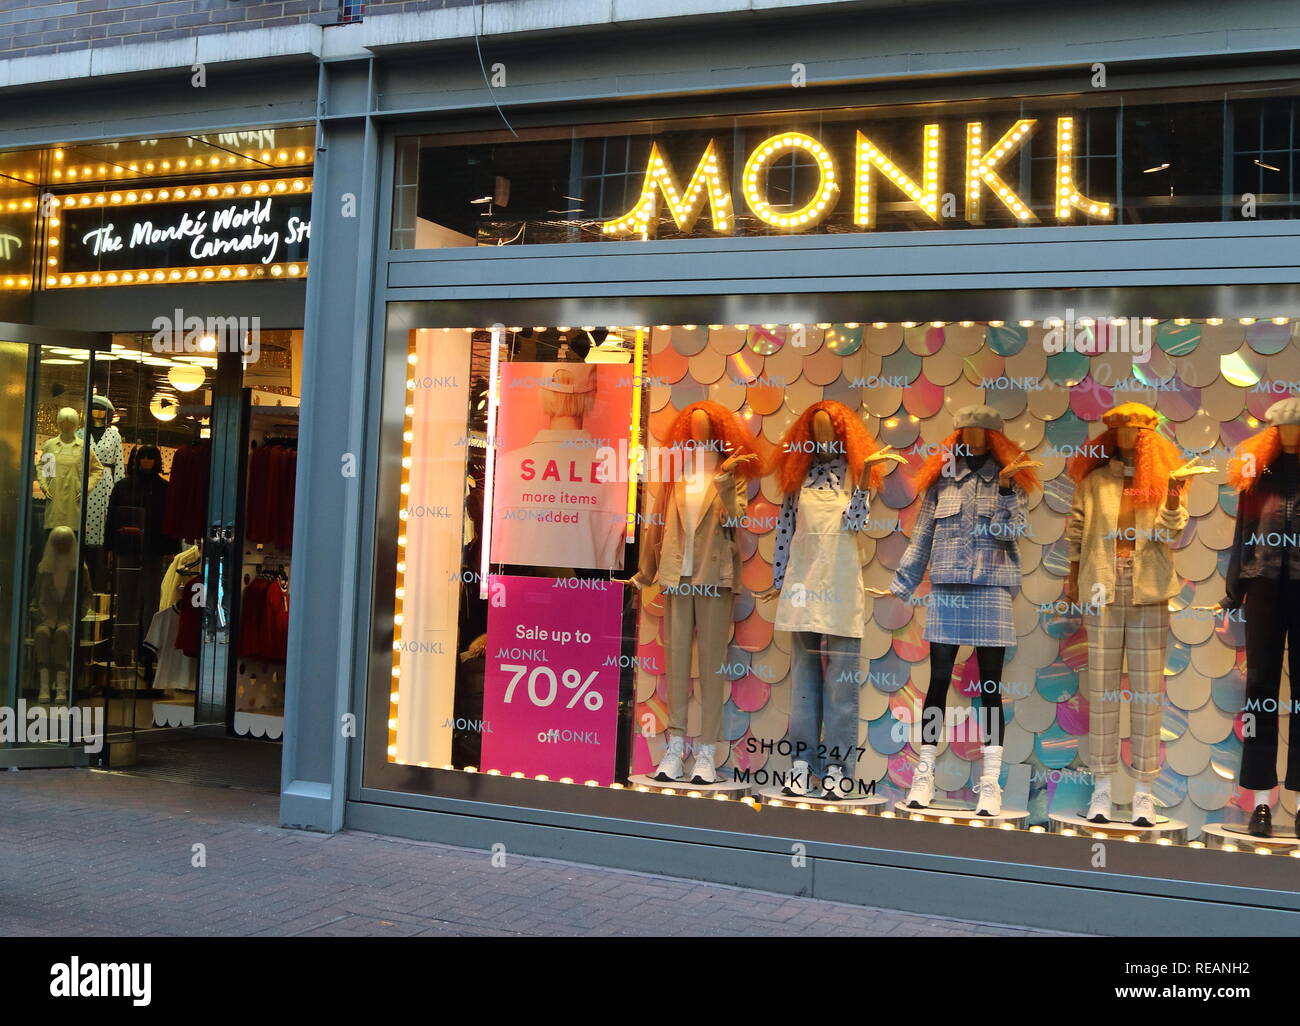 Monki brand logo seen in Carnaby Street in London, UK. Stock Photo